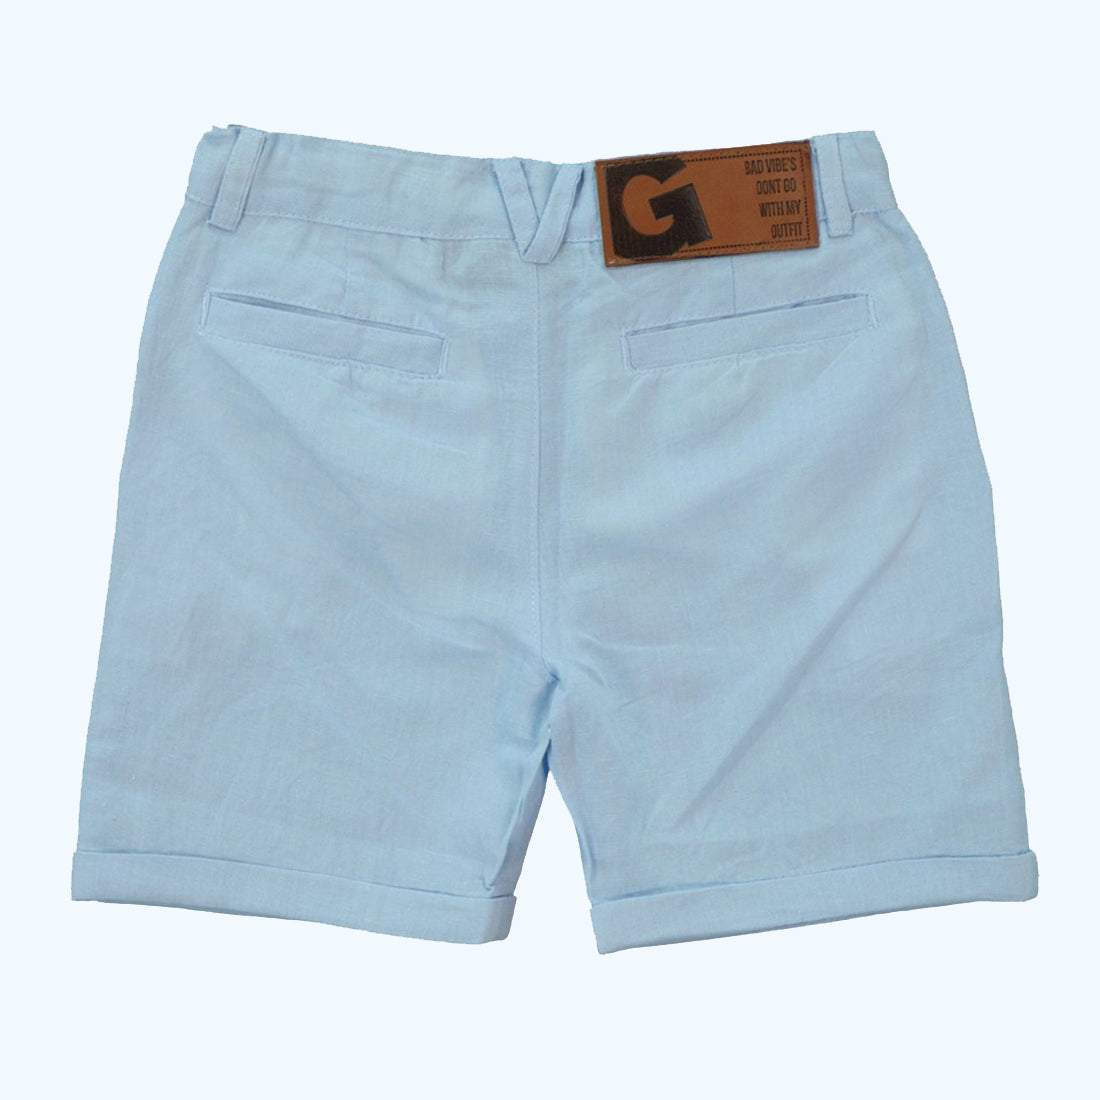 Geggamoja ® Cotton/Linen Chino Shorts - SKY BLUE